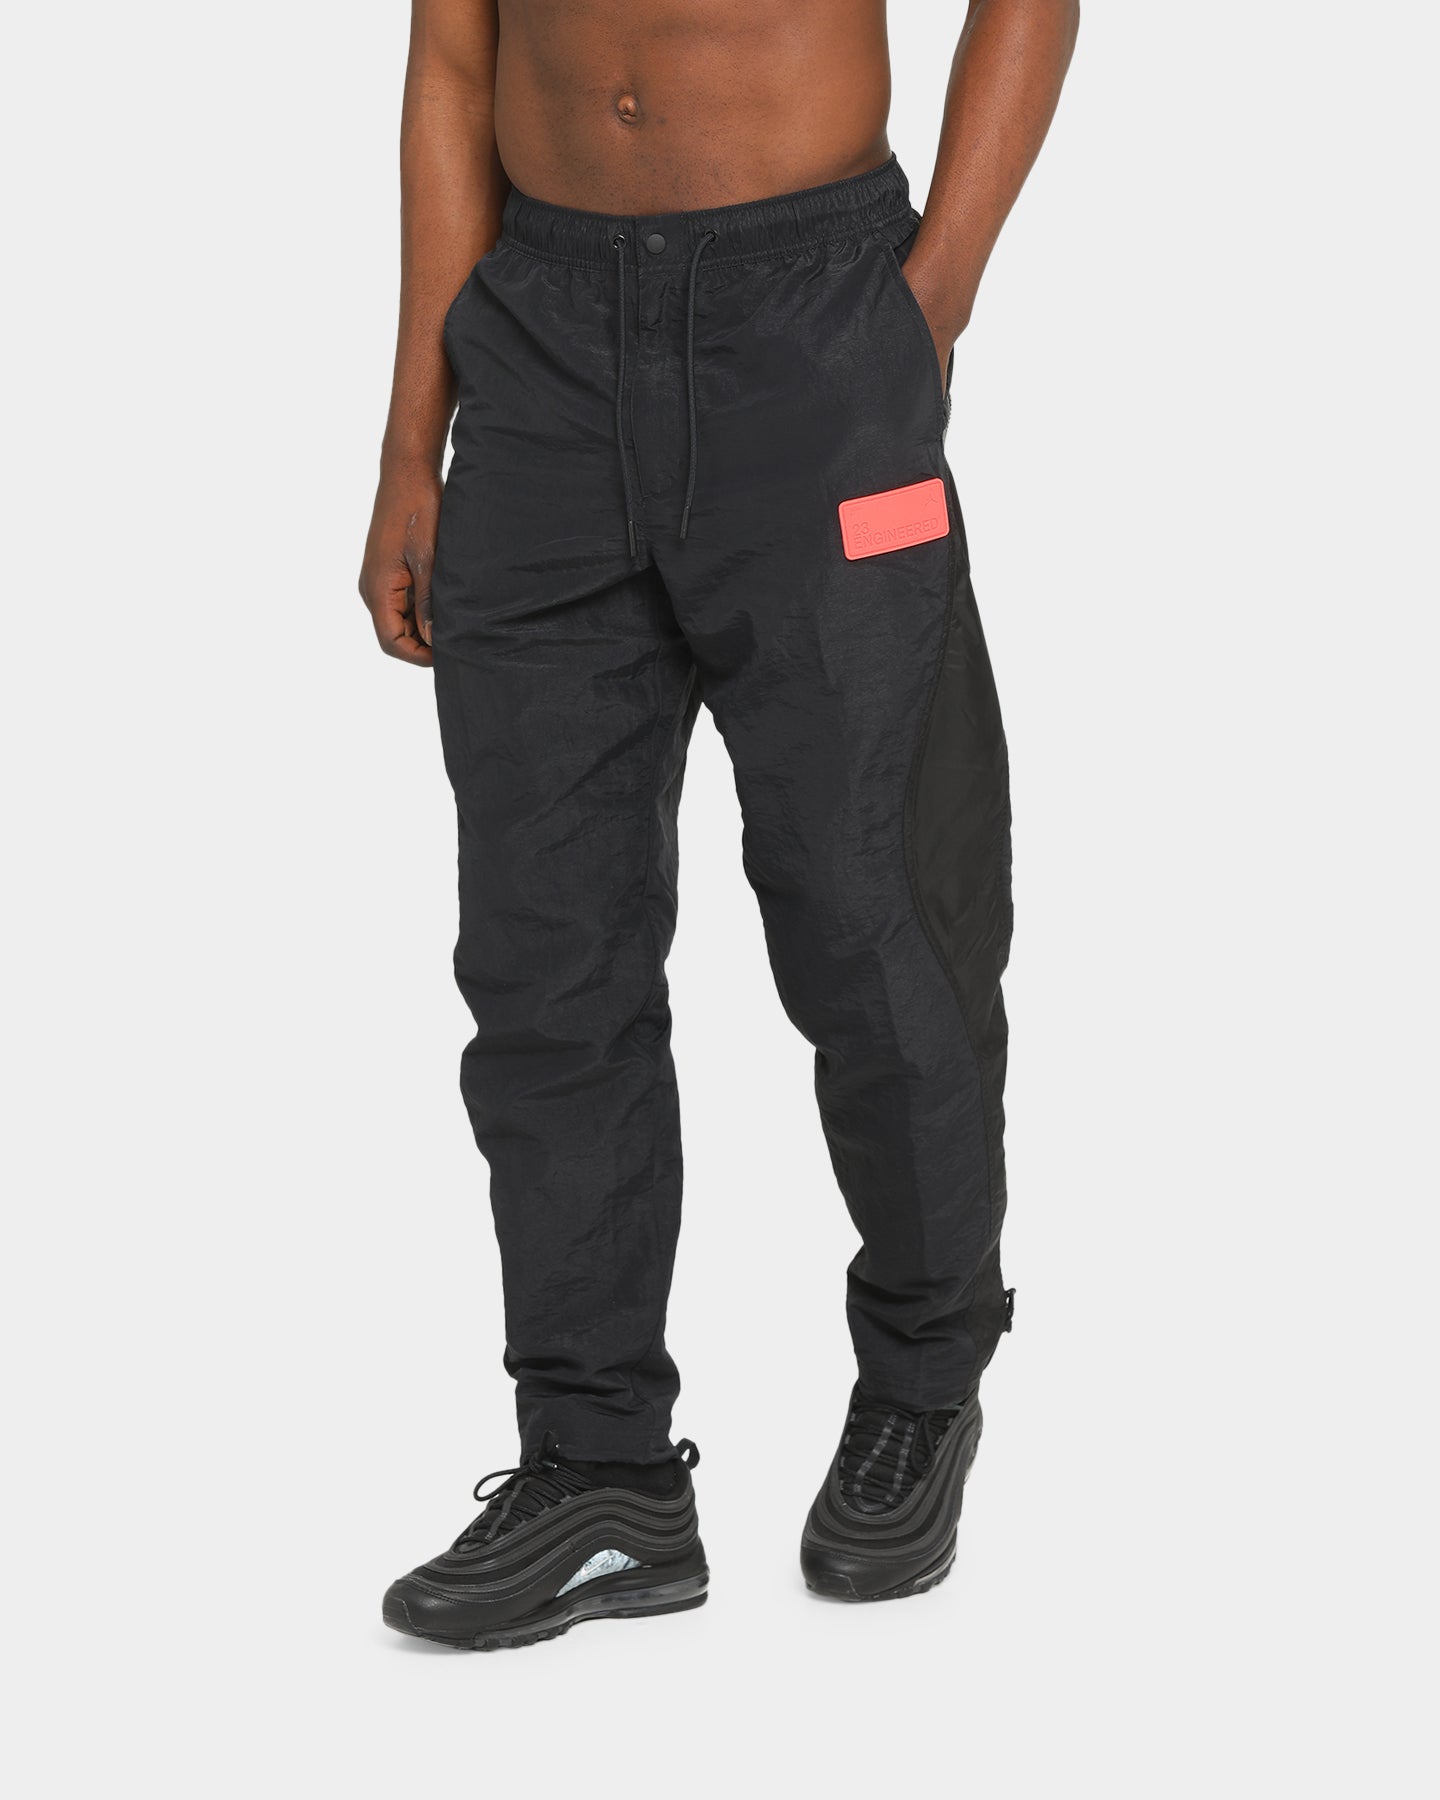 Jordan Men's 23 Engineered Pants Black 